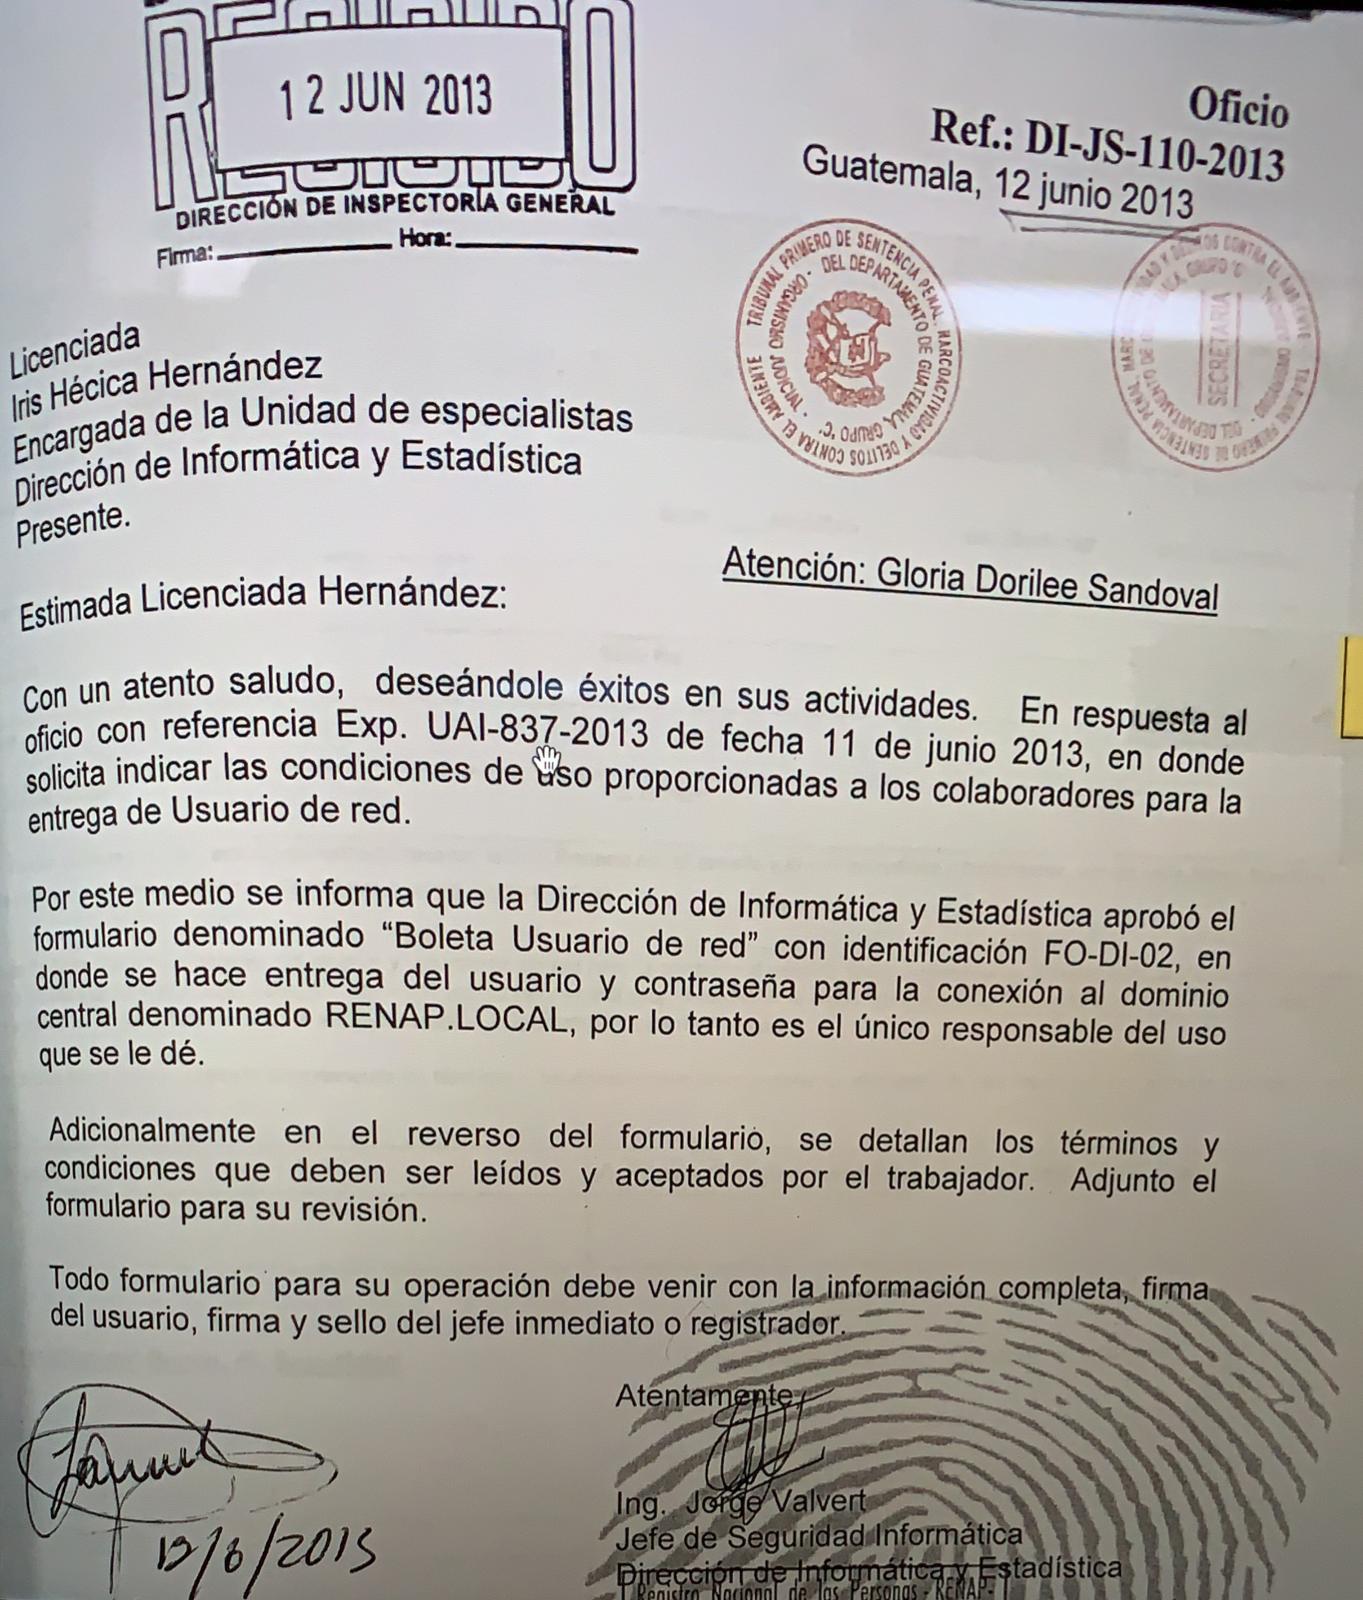 The report signed by Jorge Rafael Valert Gamboa